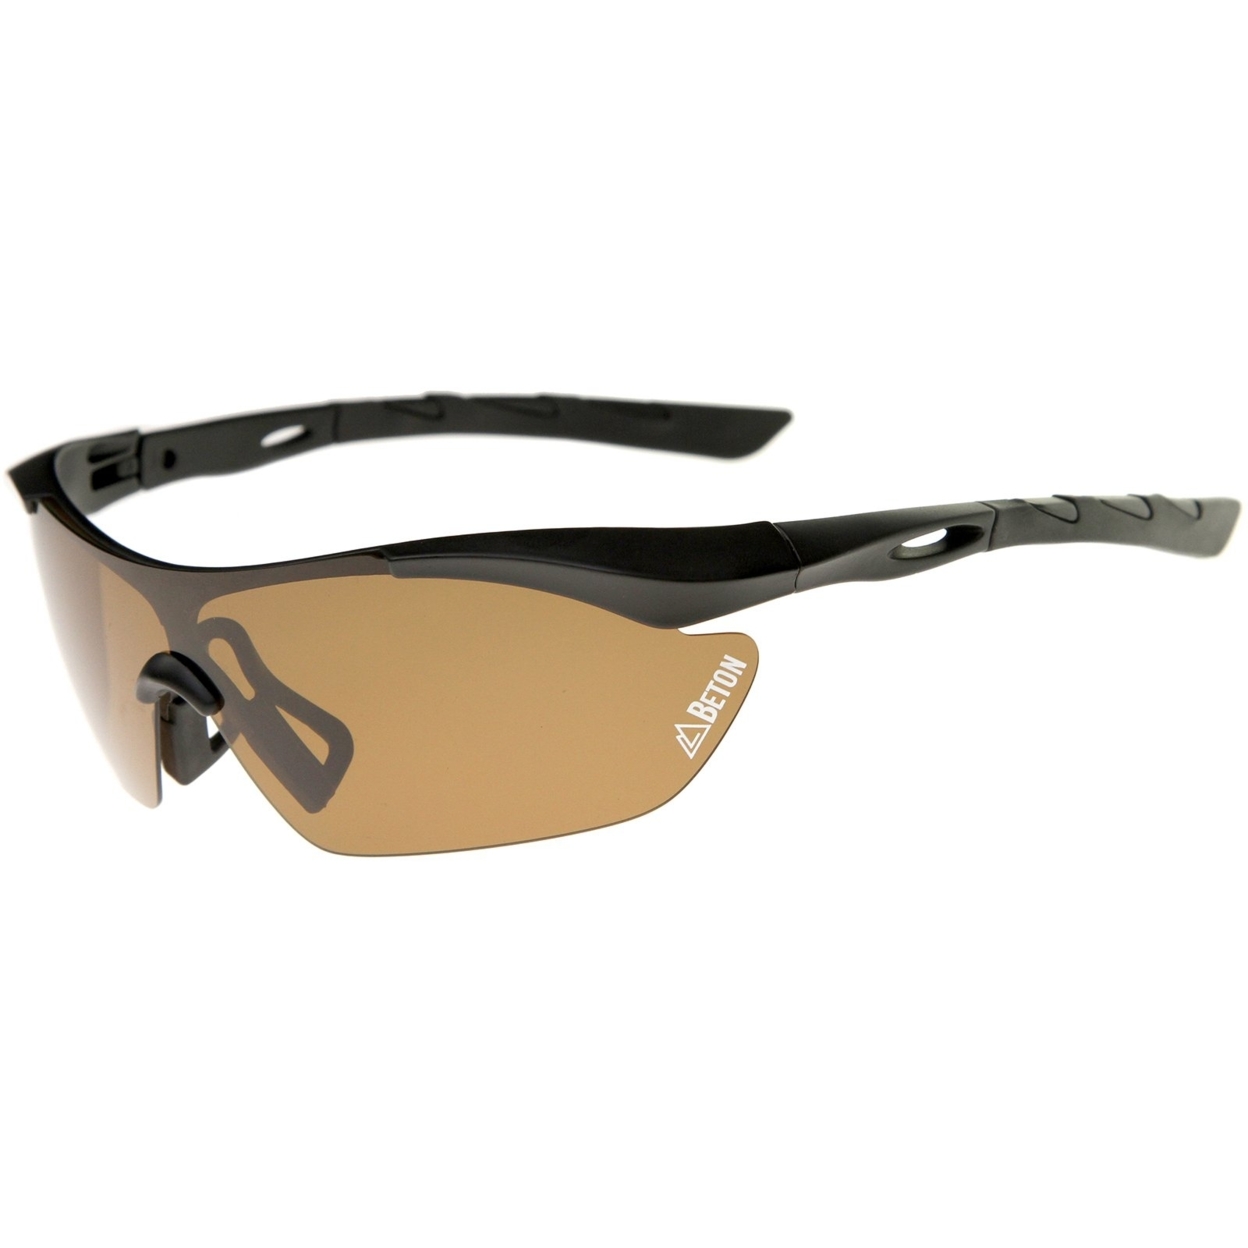 Nepal - Polarized Shatterproof Half-Frame Sports Shield Sunglasses 80mm - Shiny Black / Smoke